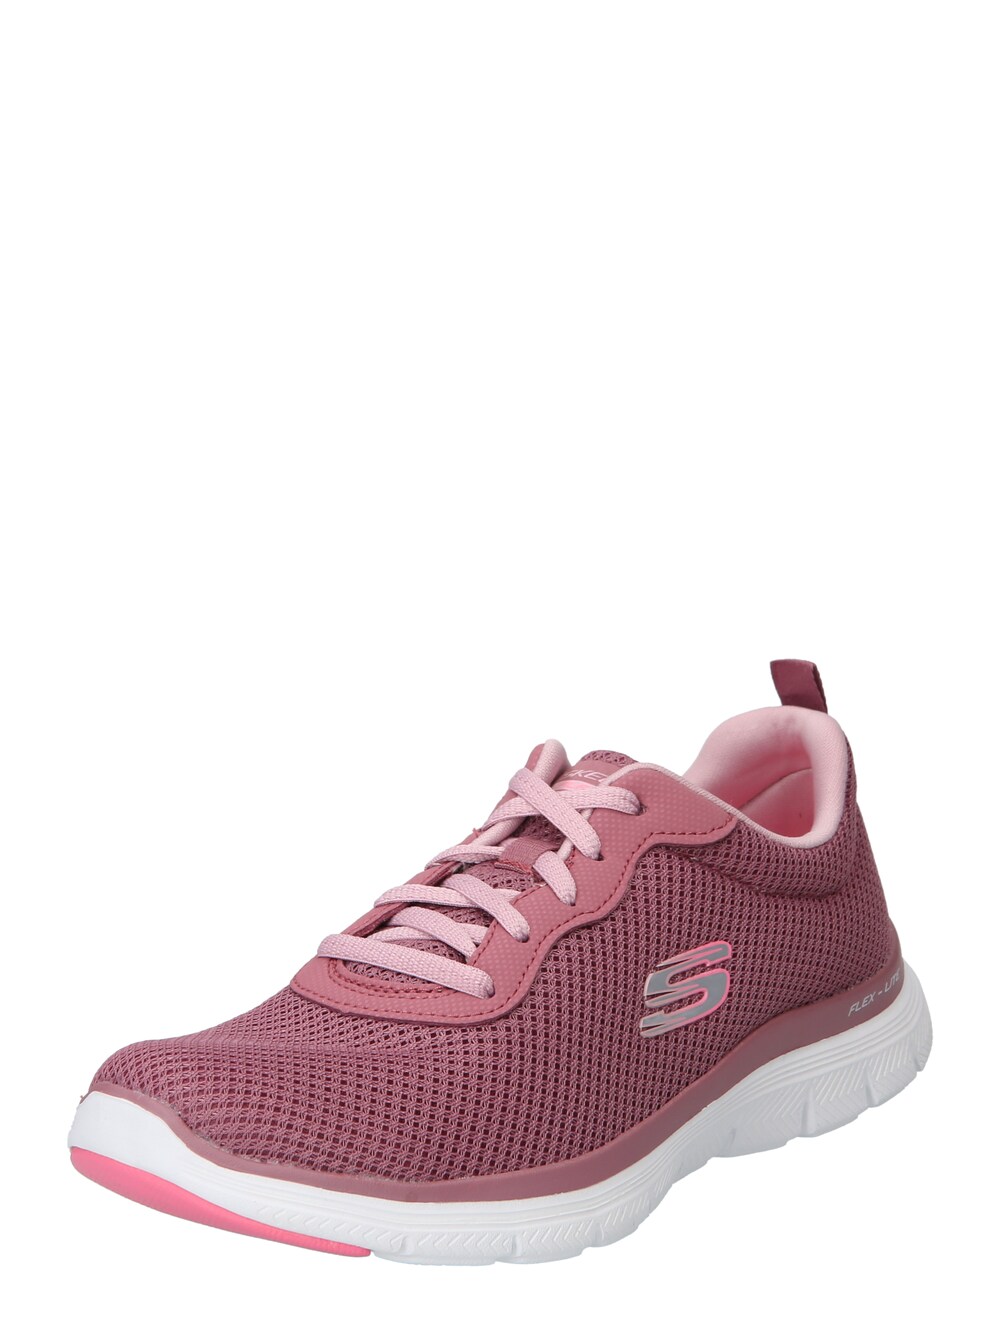 Кроссовки Skechers Flex Appeal 4.0, темно-розовый кроссовки skechers sport flex appeal 3 0 olive pink